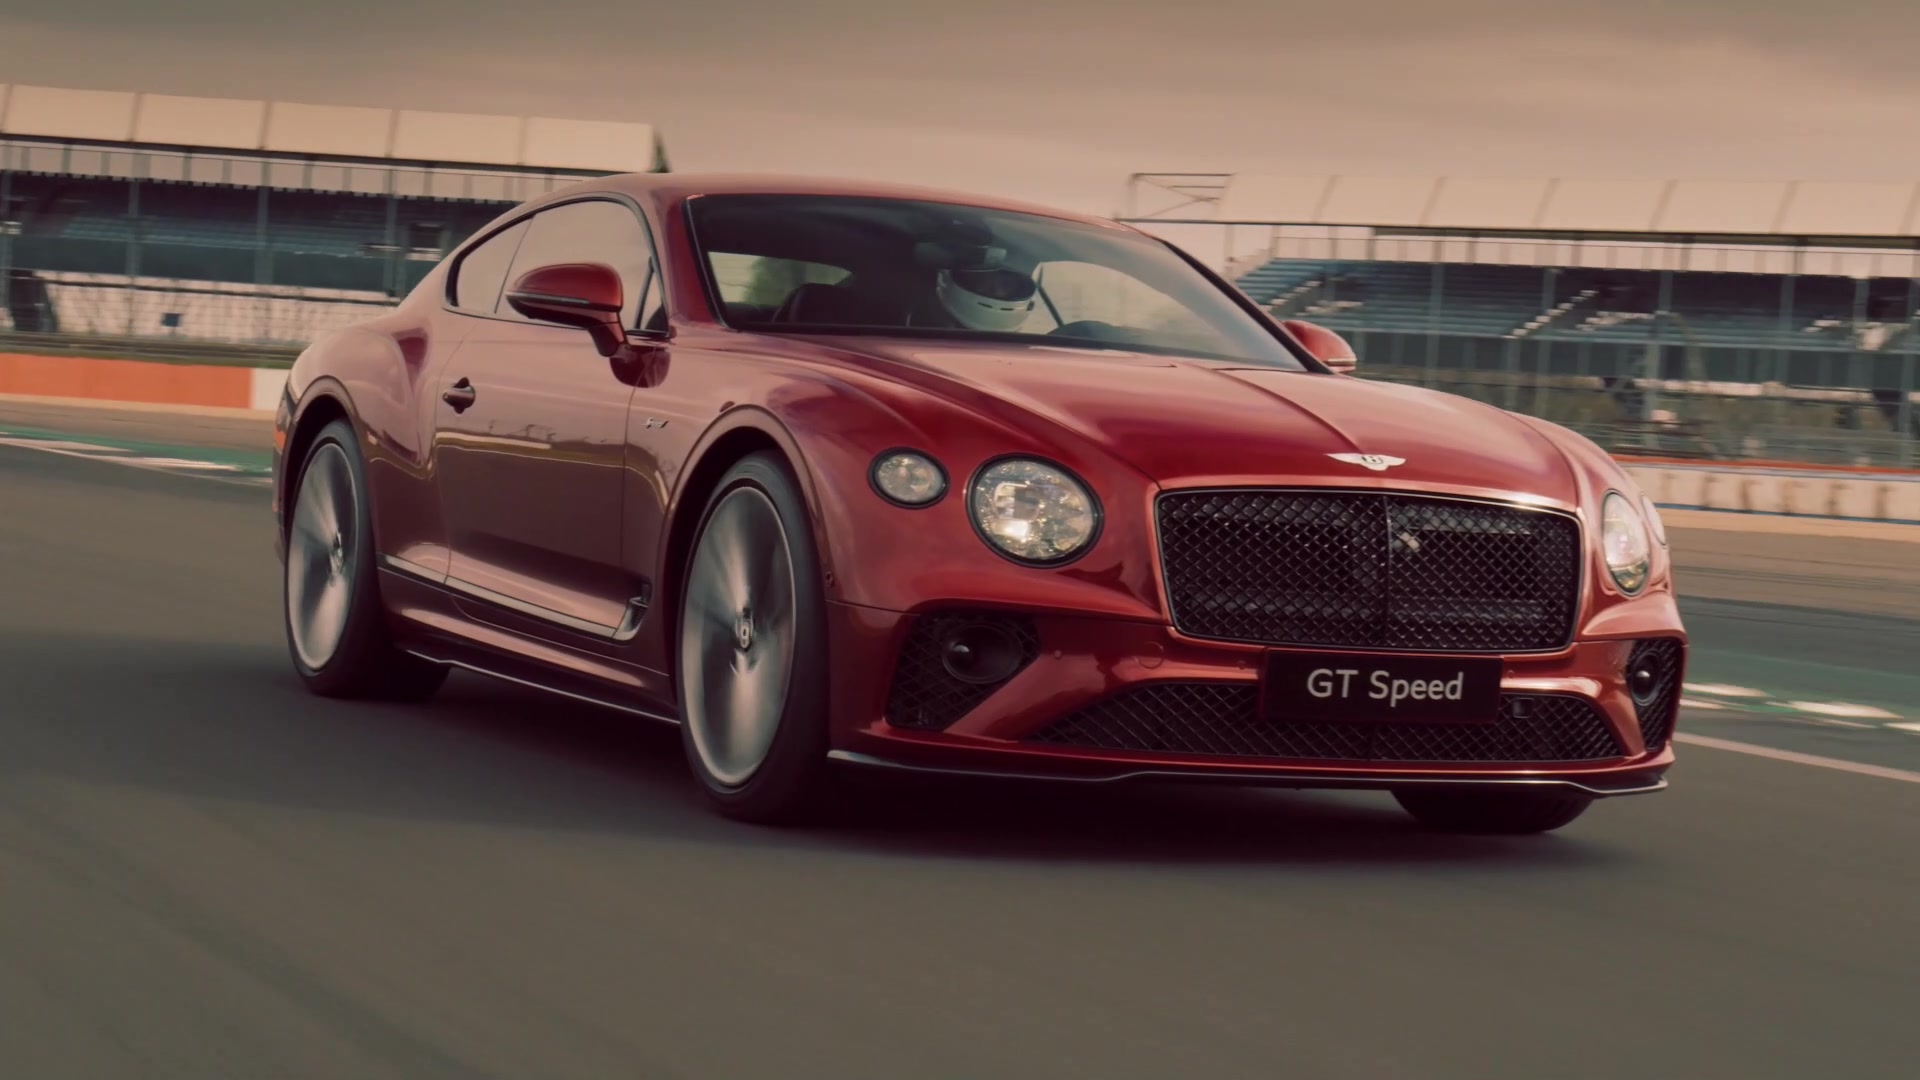 The new Bentley GT Speed Driving Video